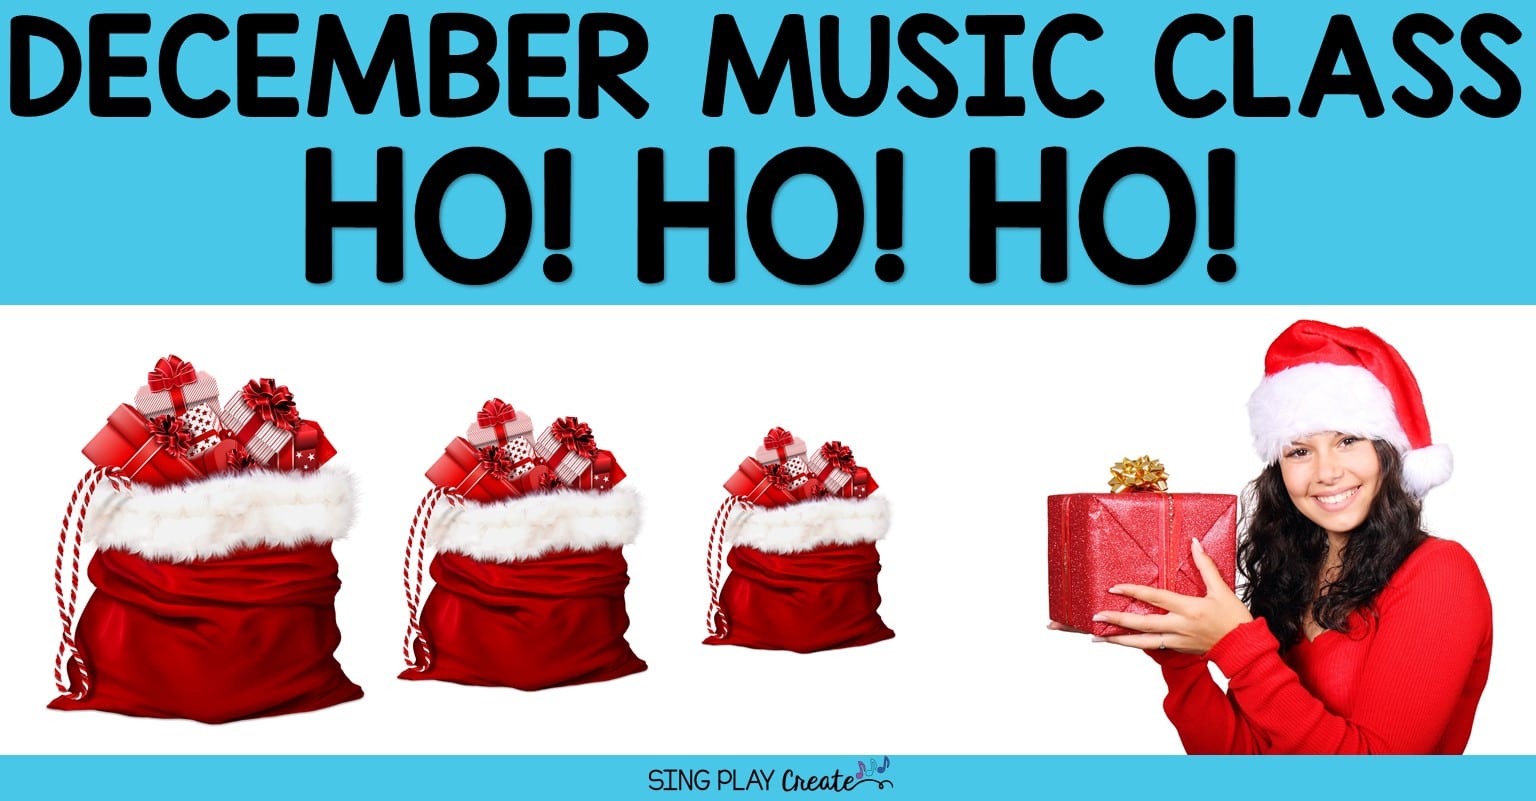 December Music Class Ho, Ho, Ho!